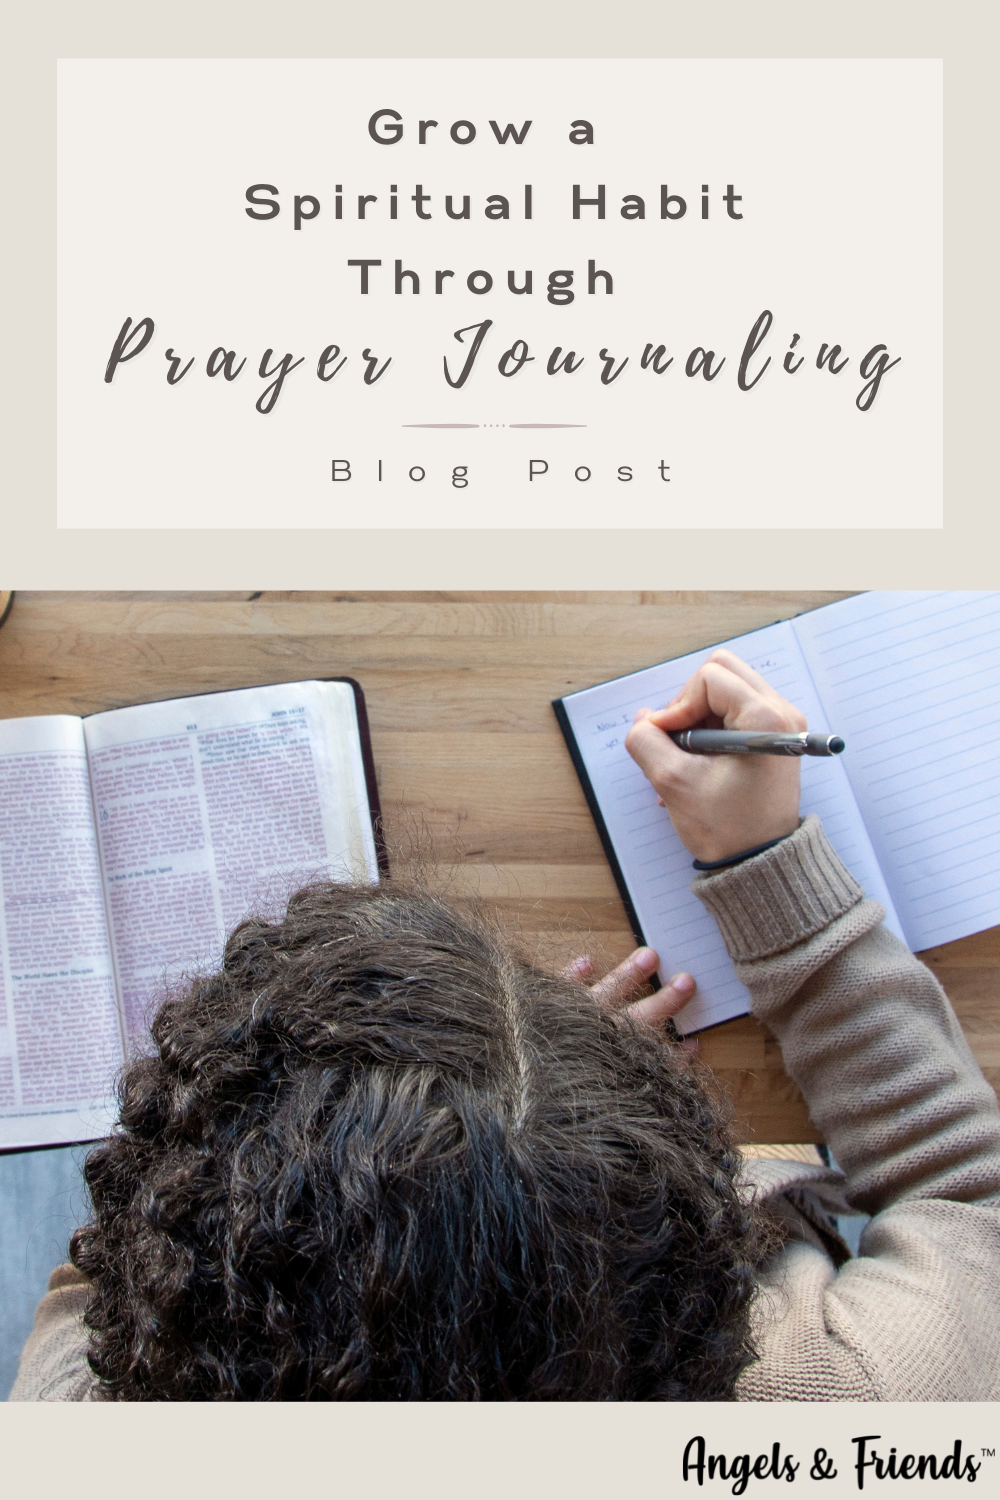 Building a Spiritual Habit Through Prayer Journaling Blog Post by Angels & Friends